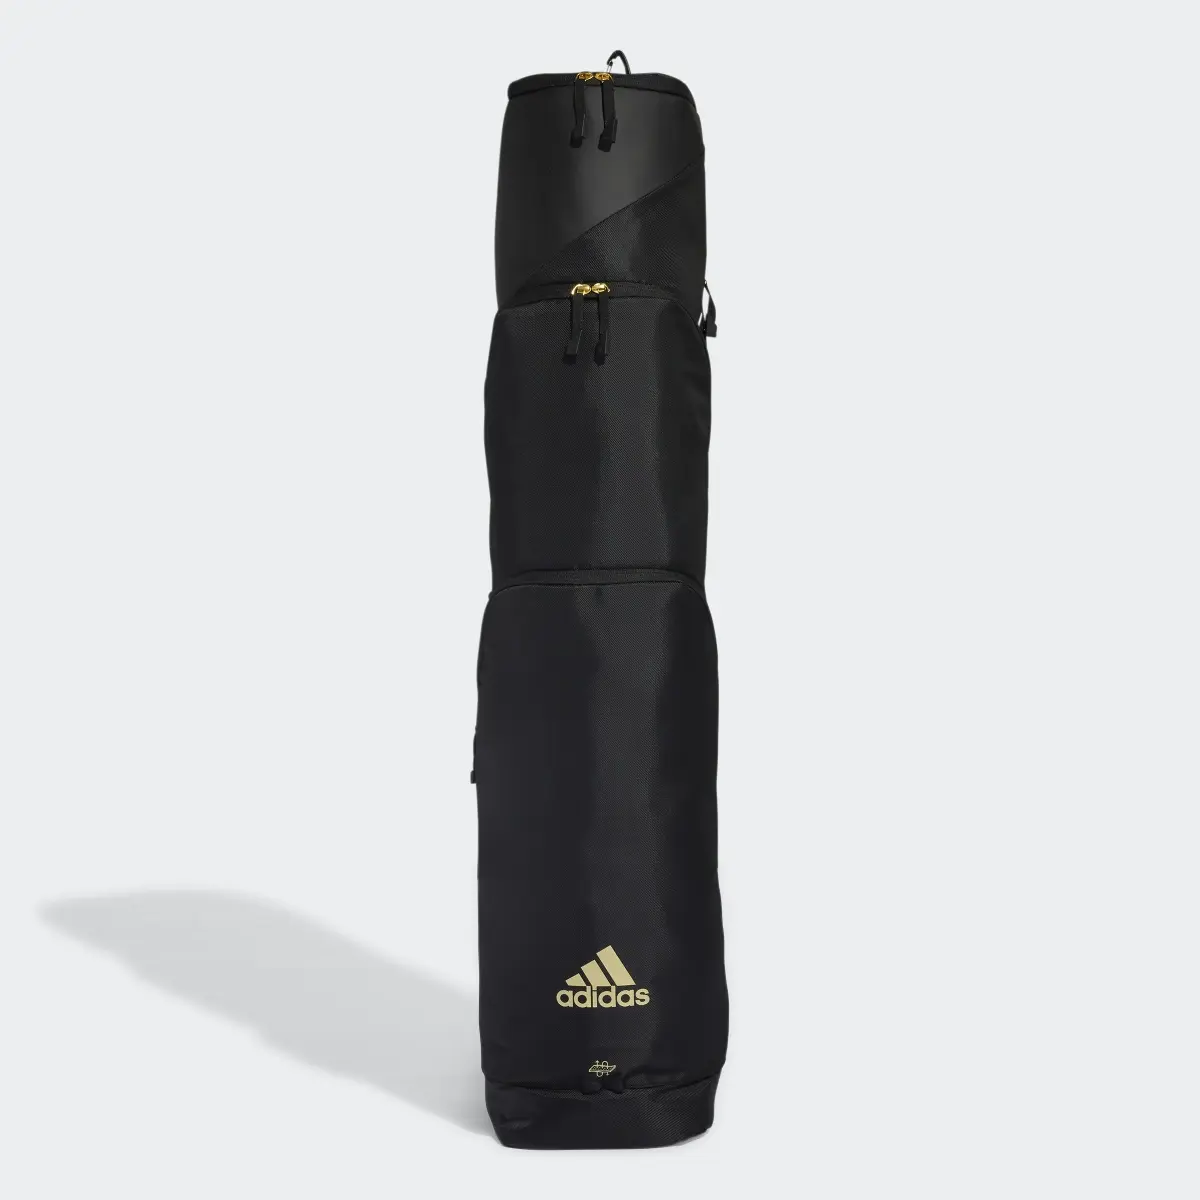 Adidas VS.6 Black/Gold Hockey Stick Bag. 2